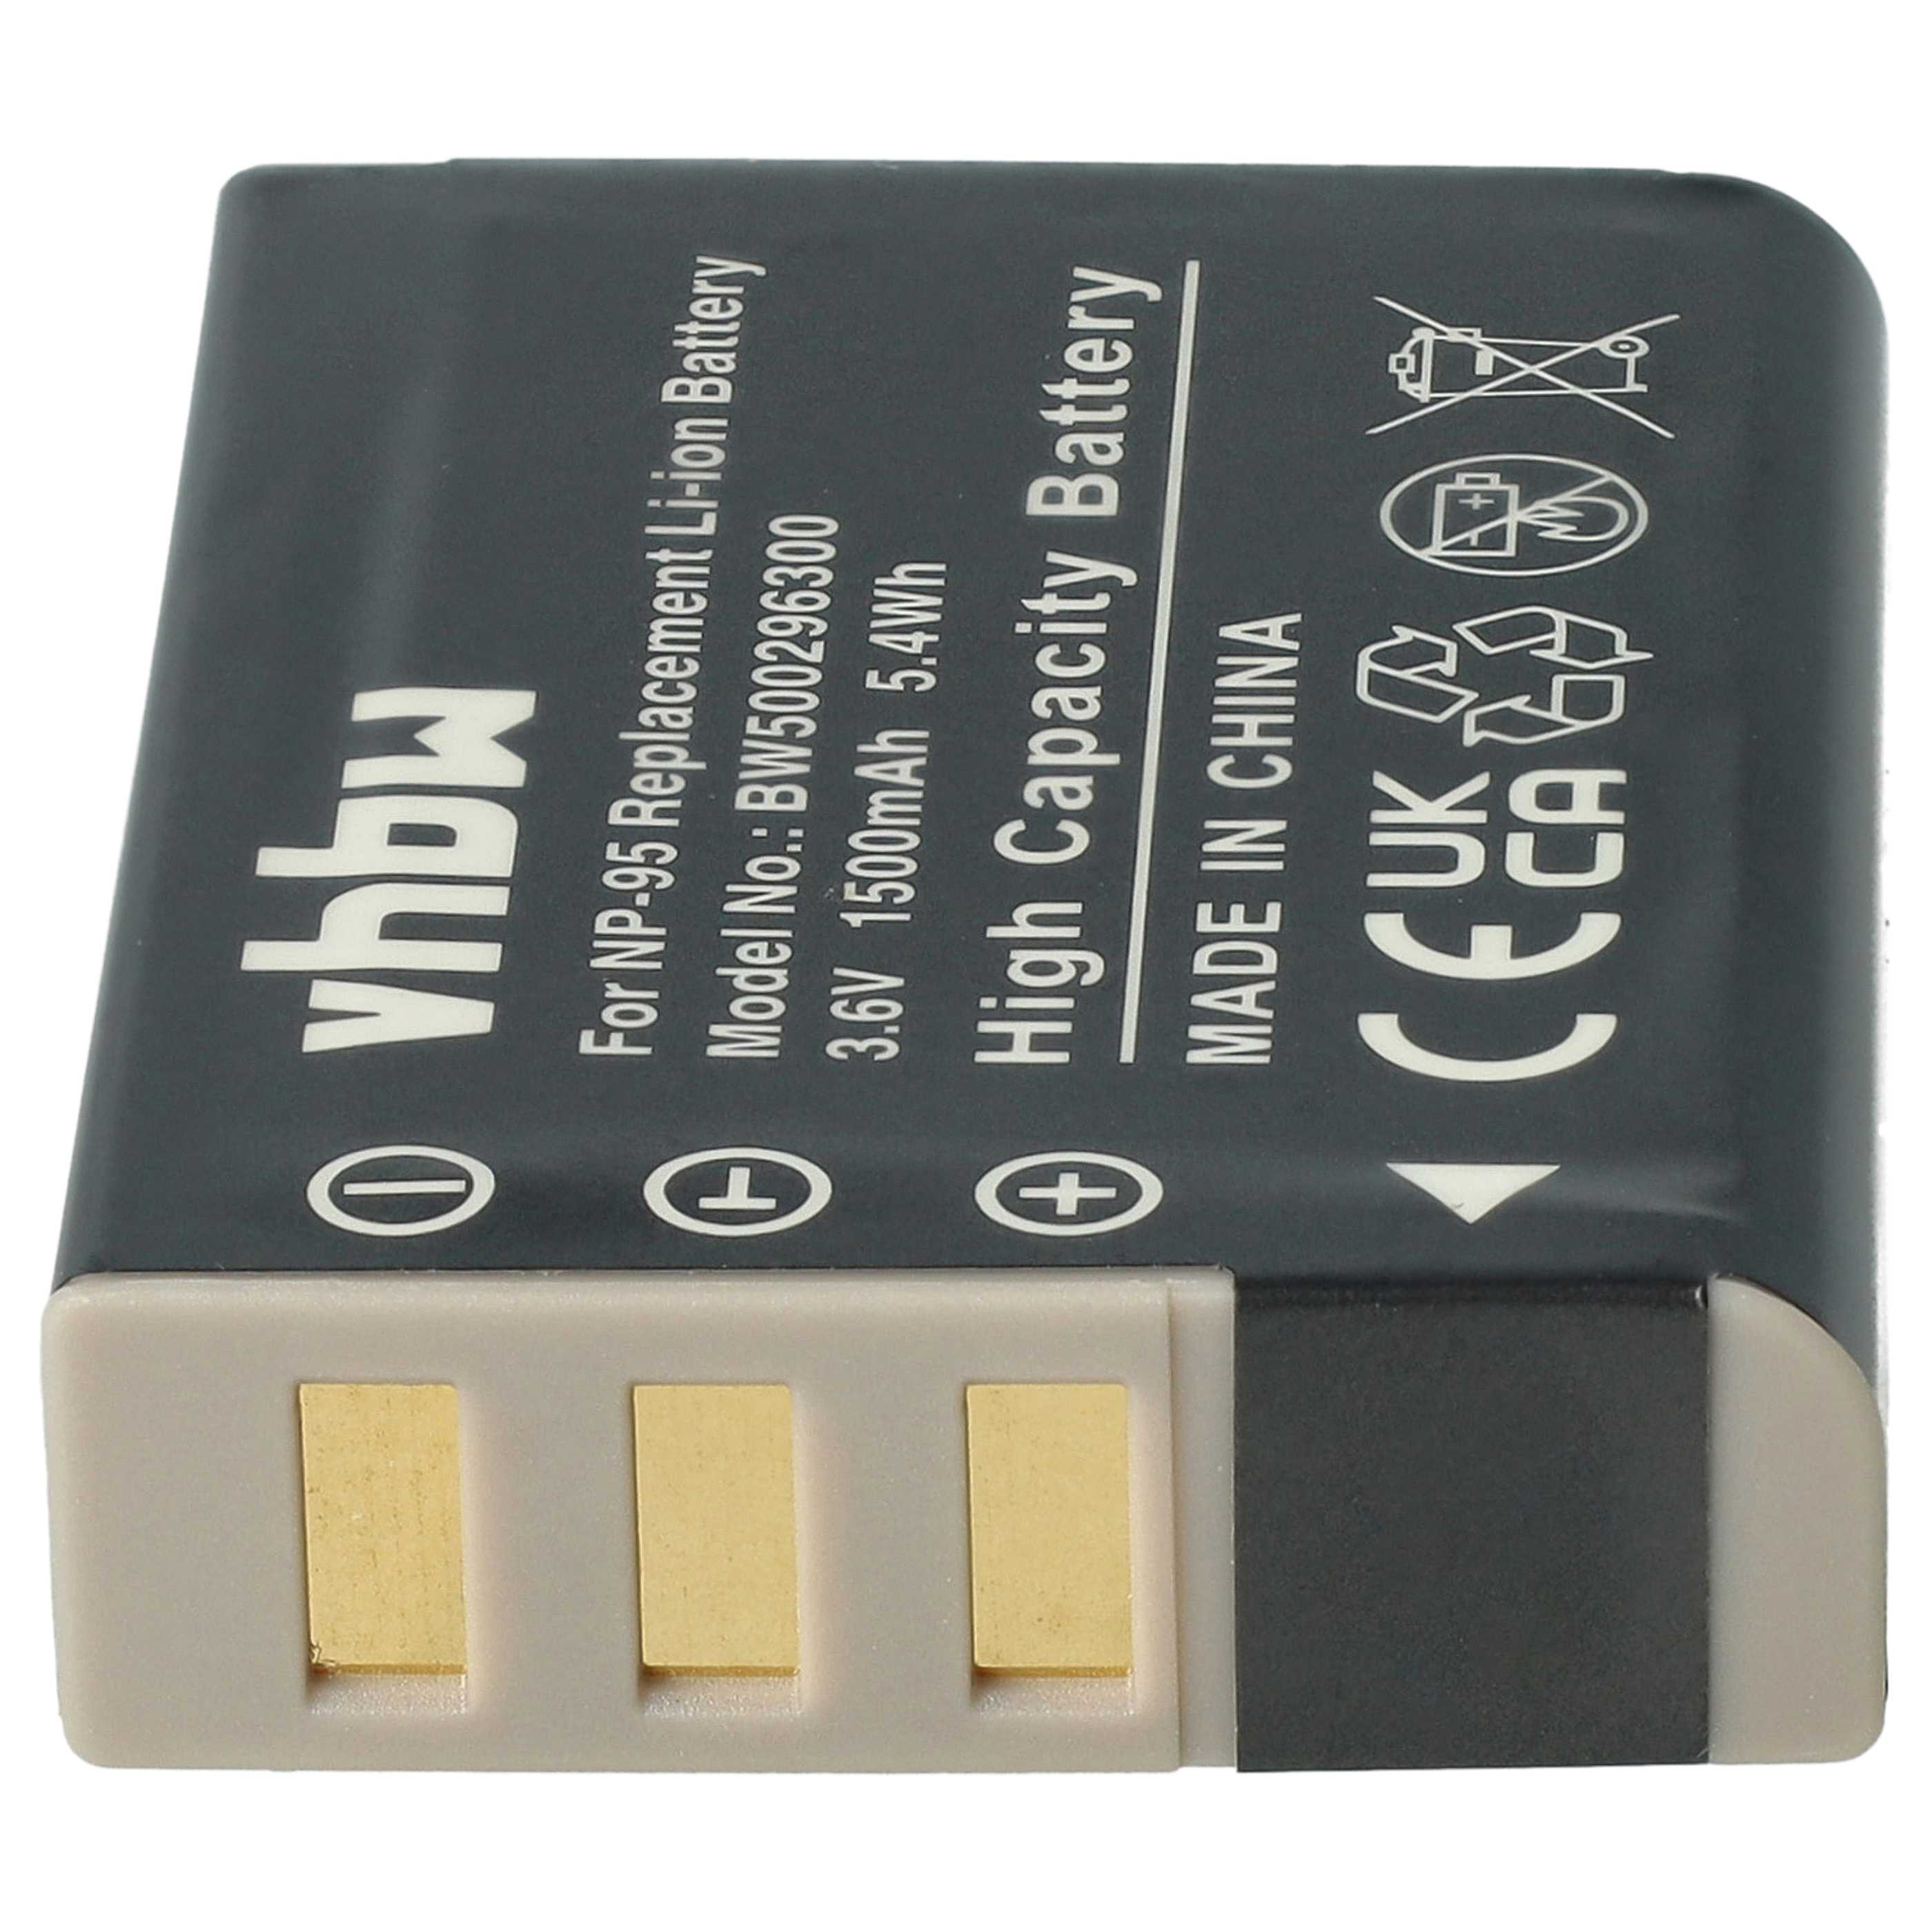 Akumulator do aparatu cyfrowego zamiennik Fuji / Fujifilm NP-95 - 1500 mAh 3,6 V Li-Ion